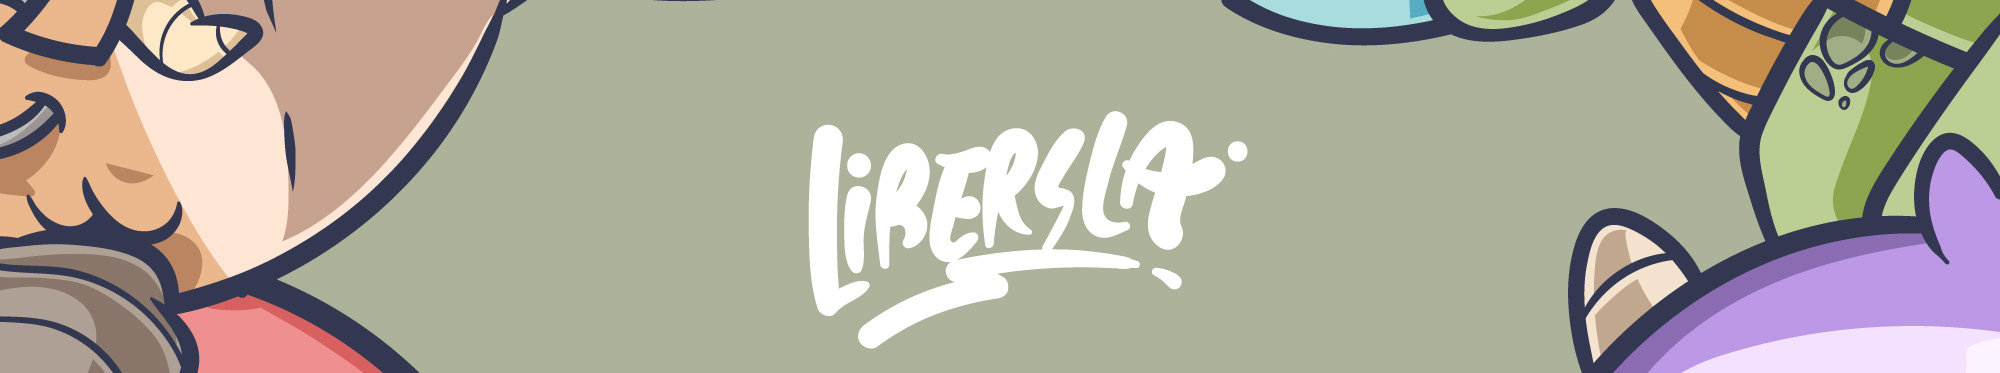 Libersla @iftahadinuha's profile banner